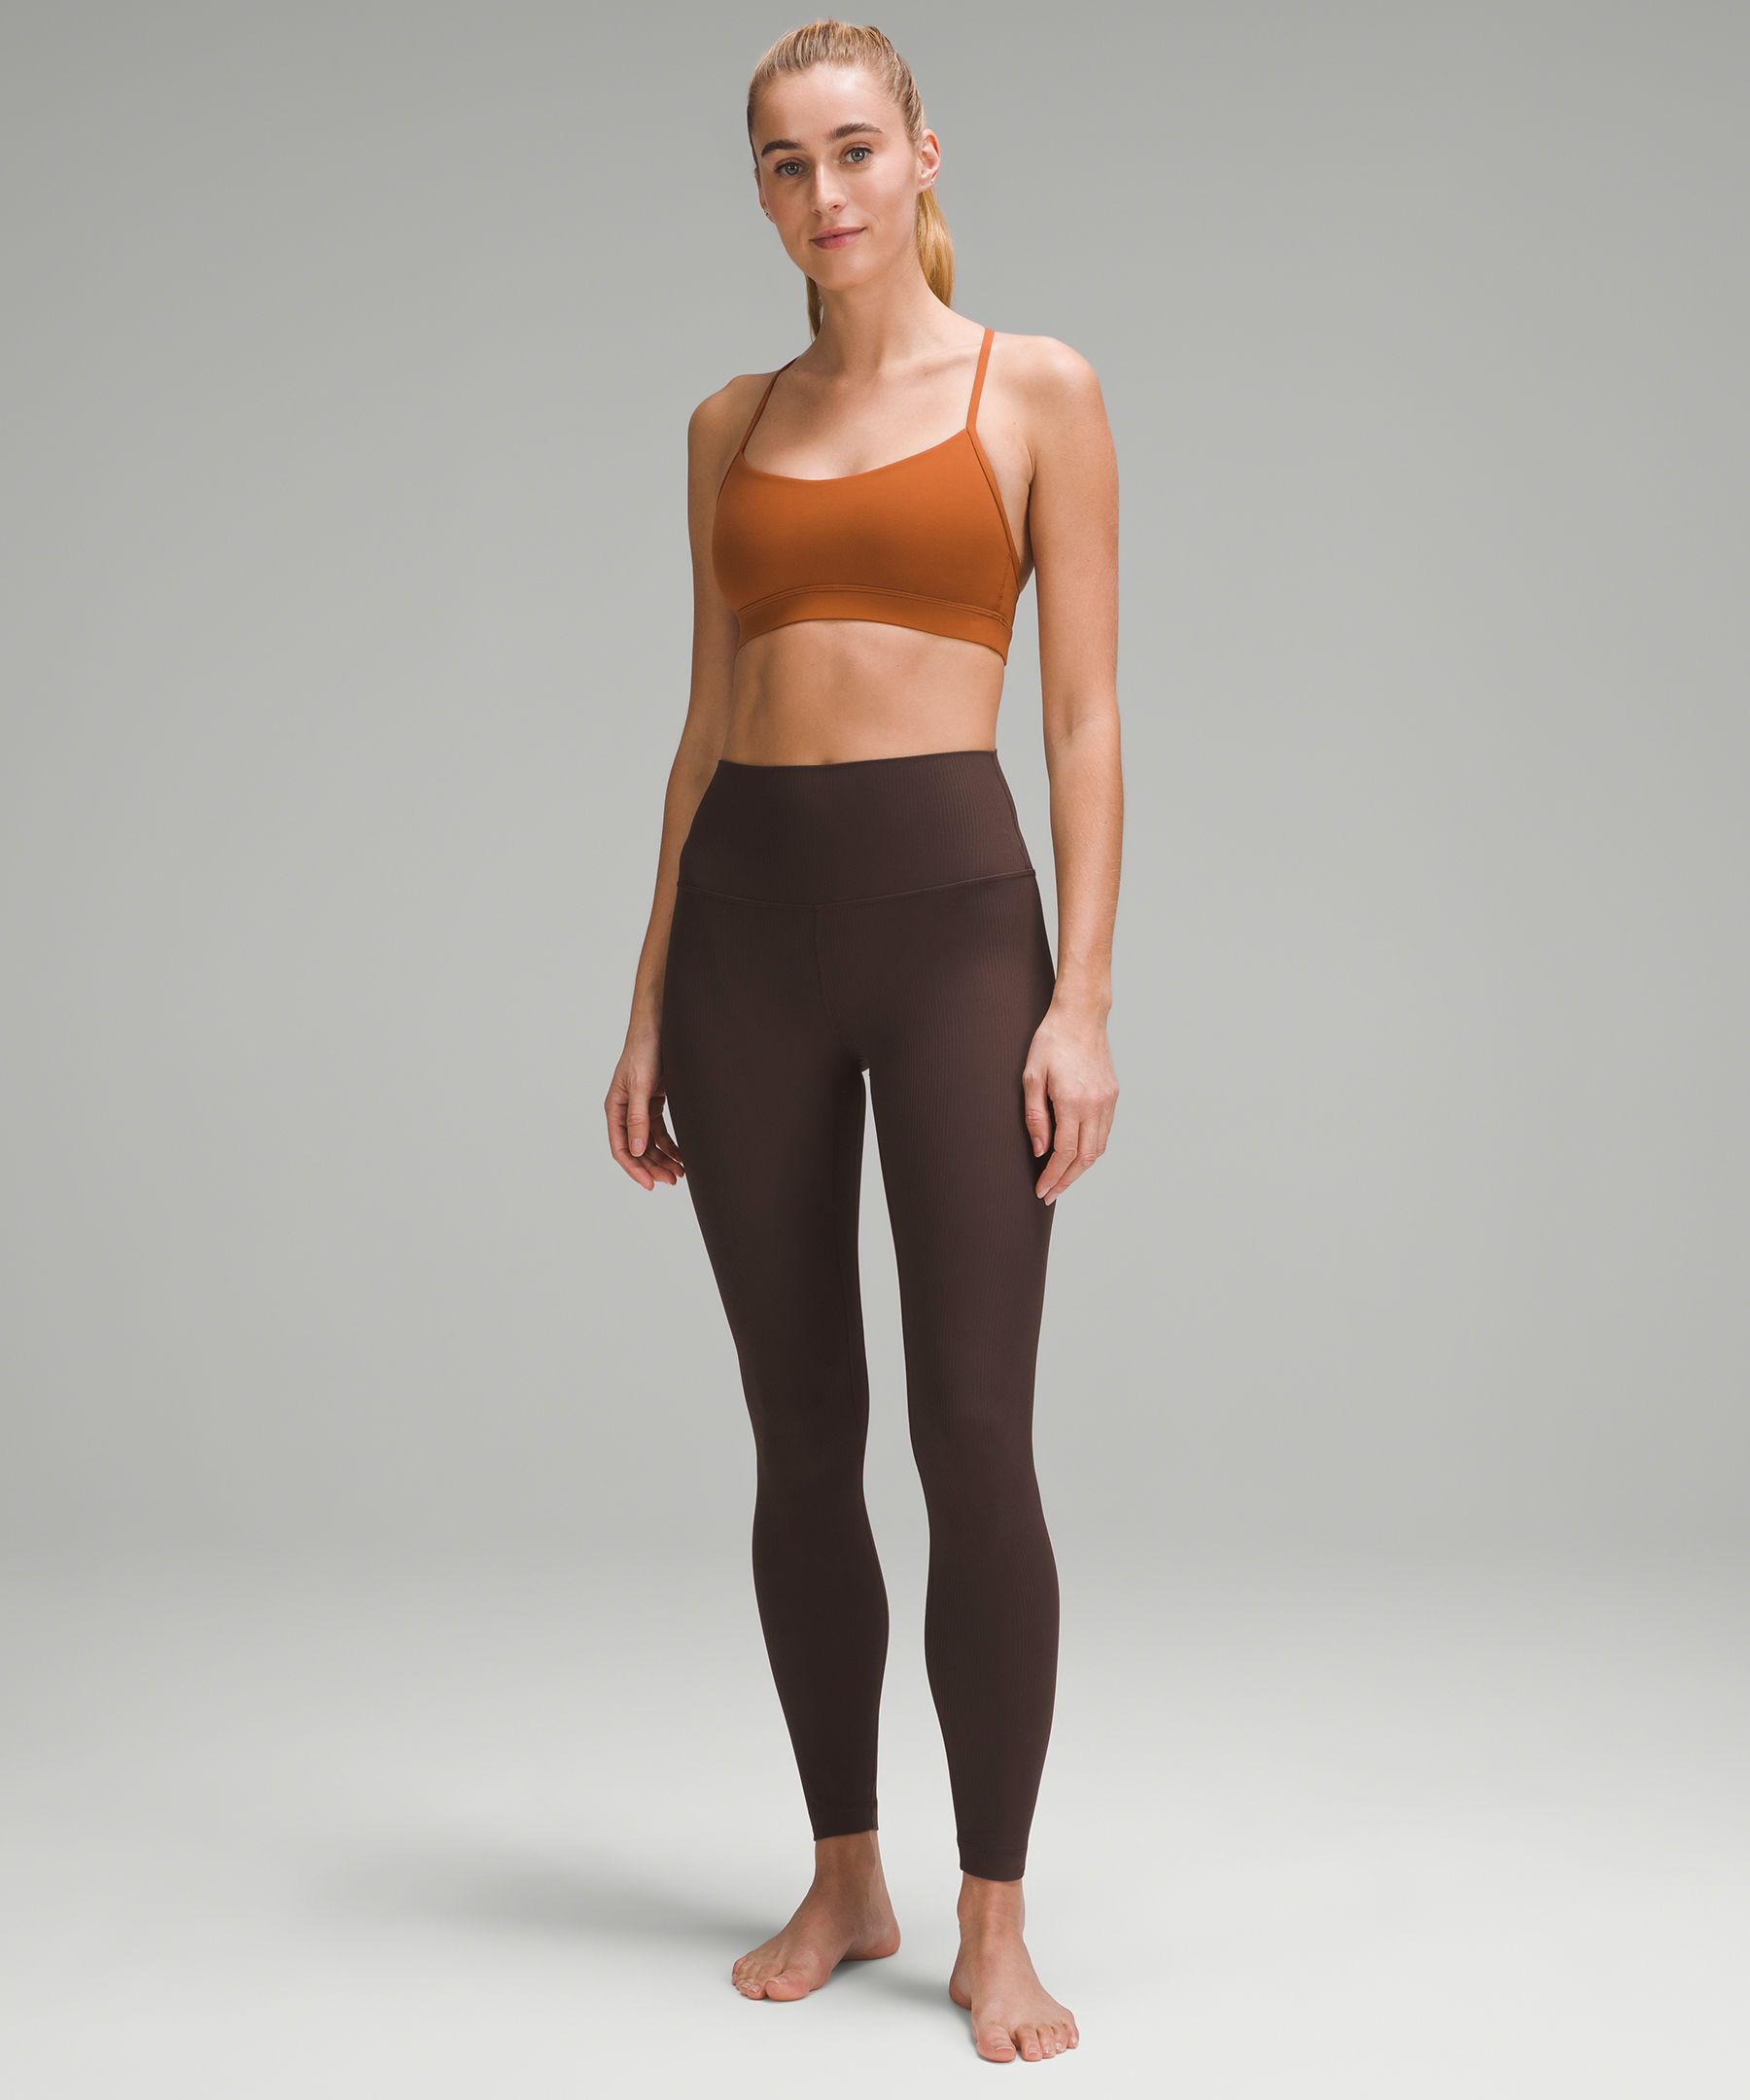 Lululemon Gray Brushed Herringbone Full Length Leggings Tights Activewear  Yoga